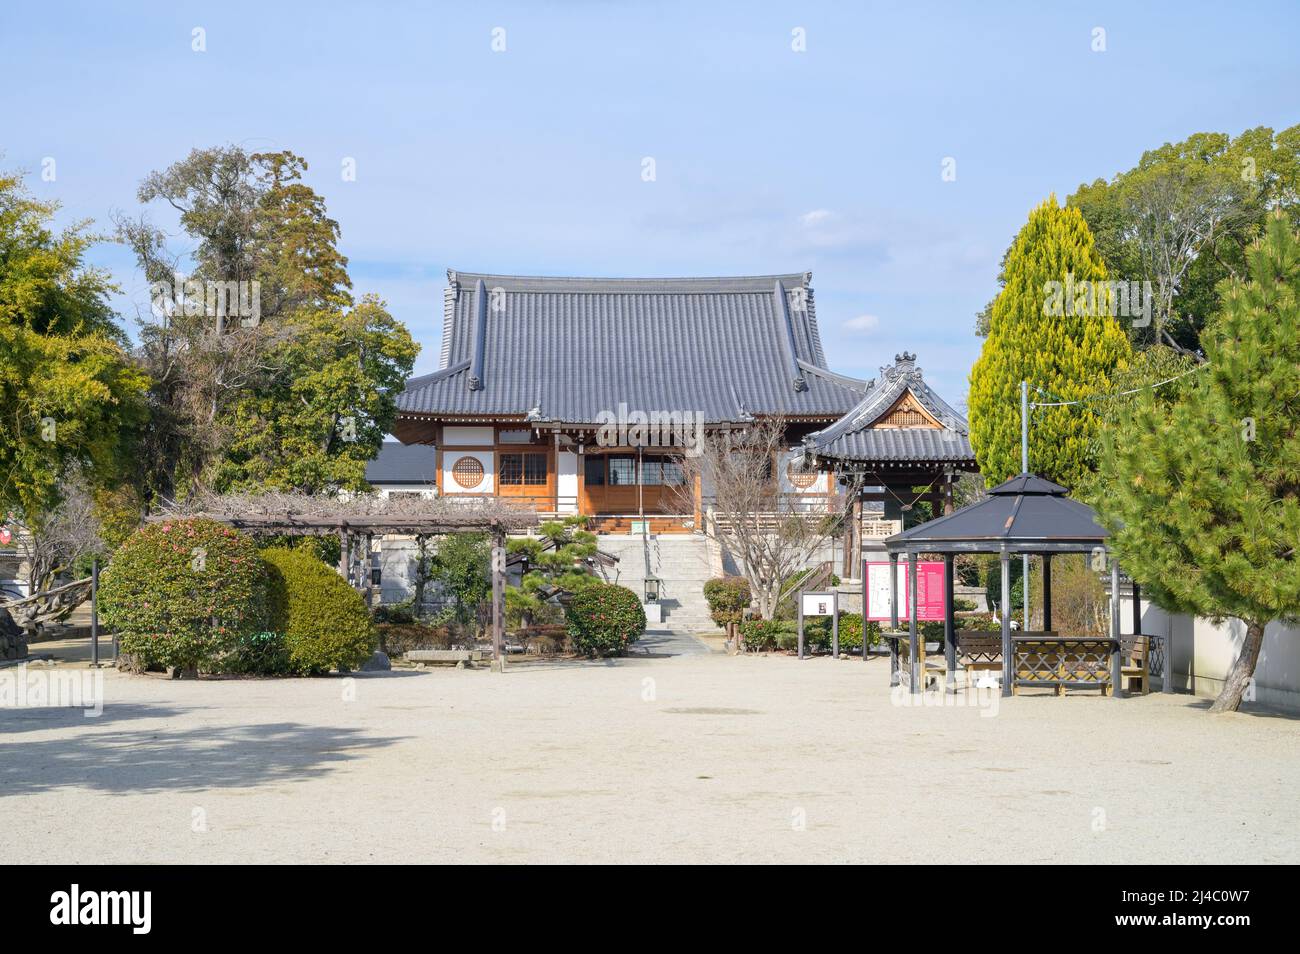 Front entrance of the Darumaji Buddhist temple in Oji, Nara Prefecture, Japan. Stock Photo